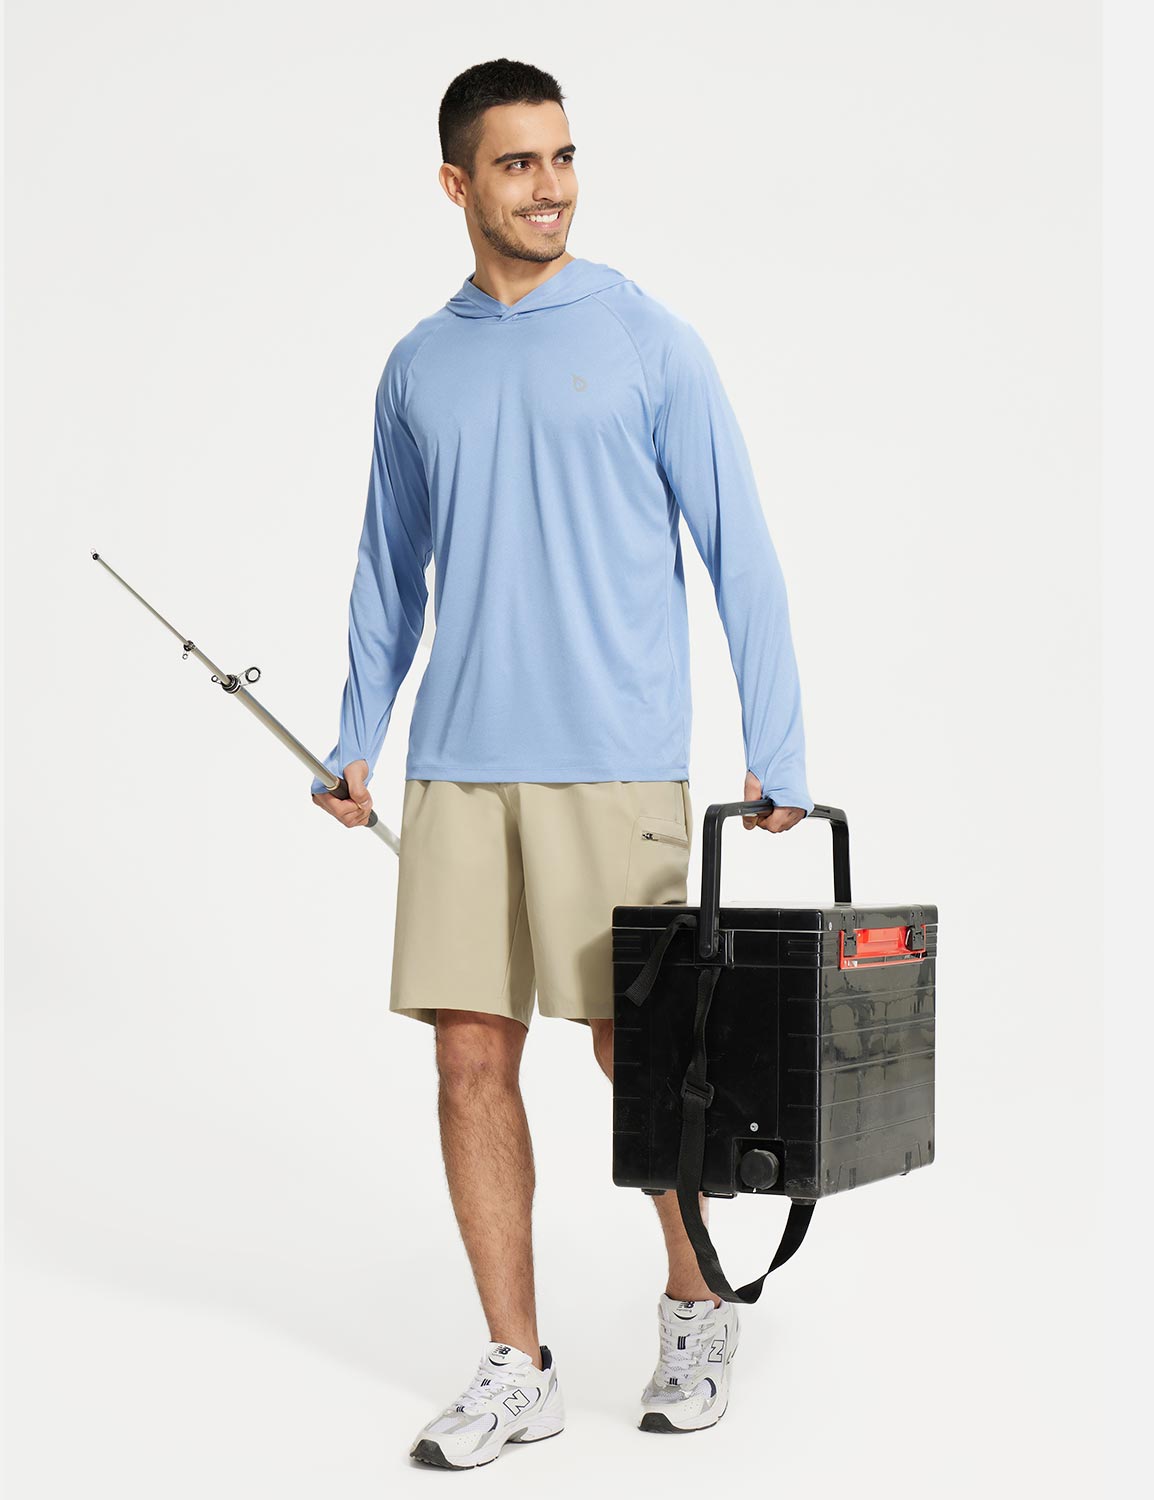 Baleaf Men's Breathable Multi-pocket Fishing Shorts Doeskin Full